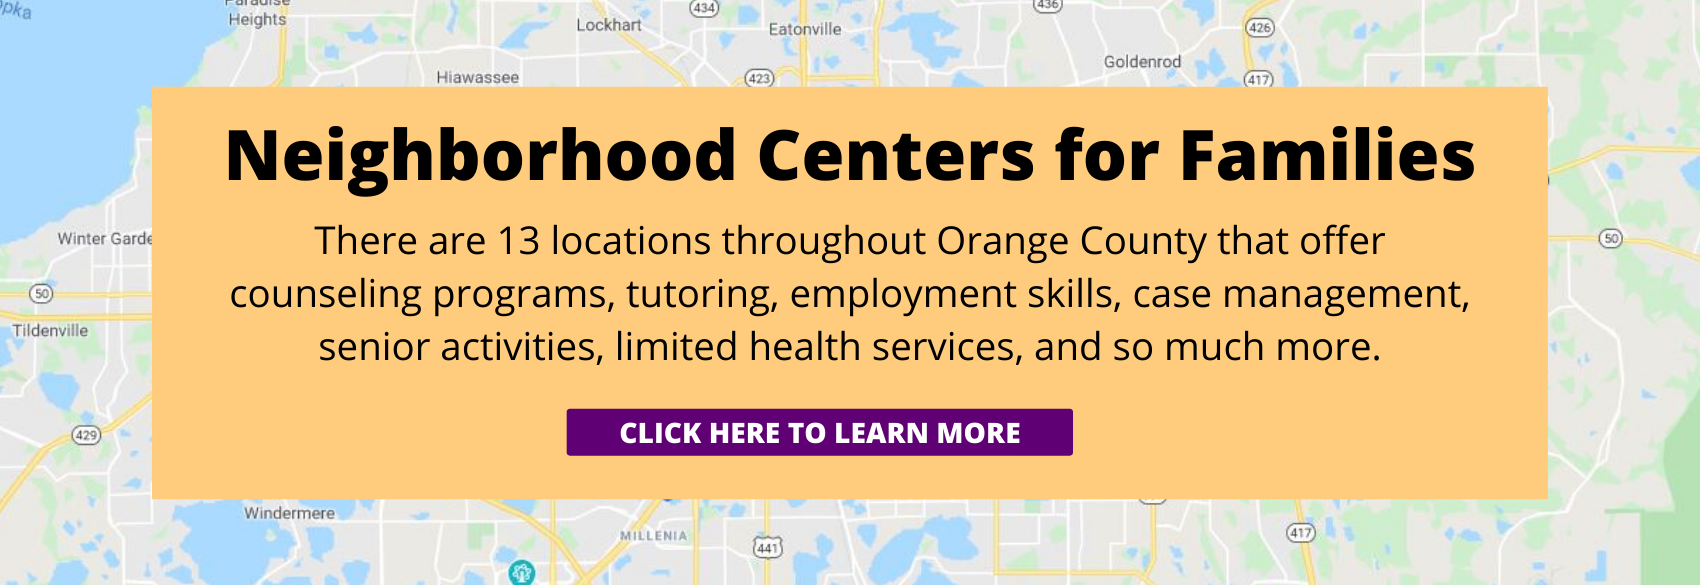 Neighborhood Centers for Families